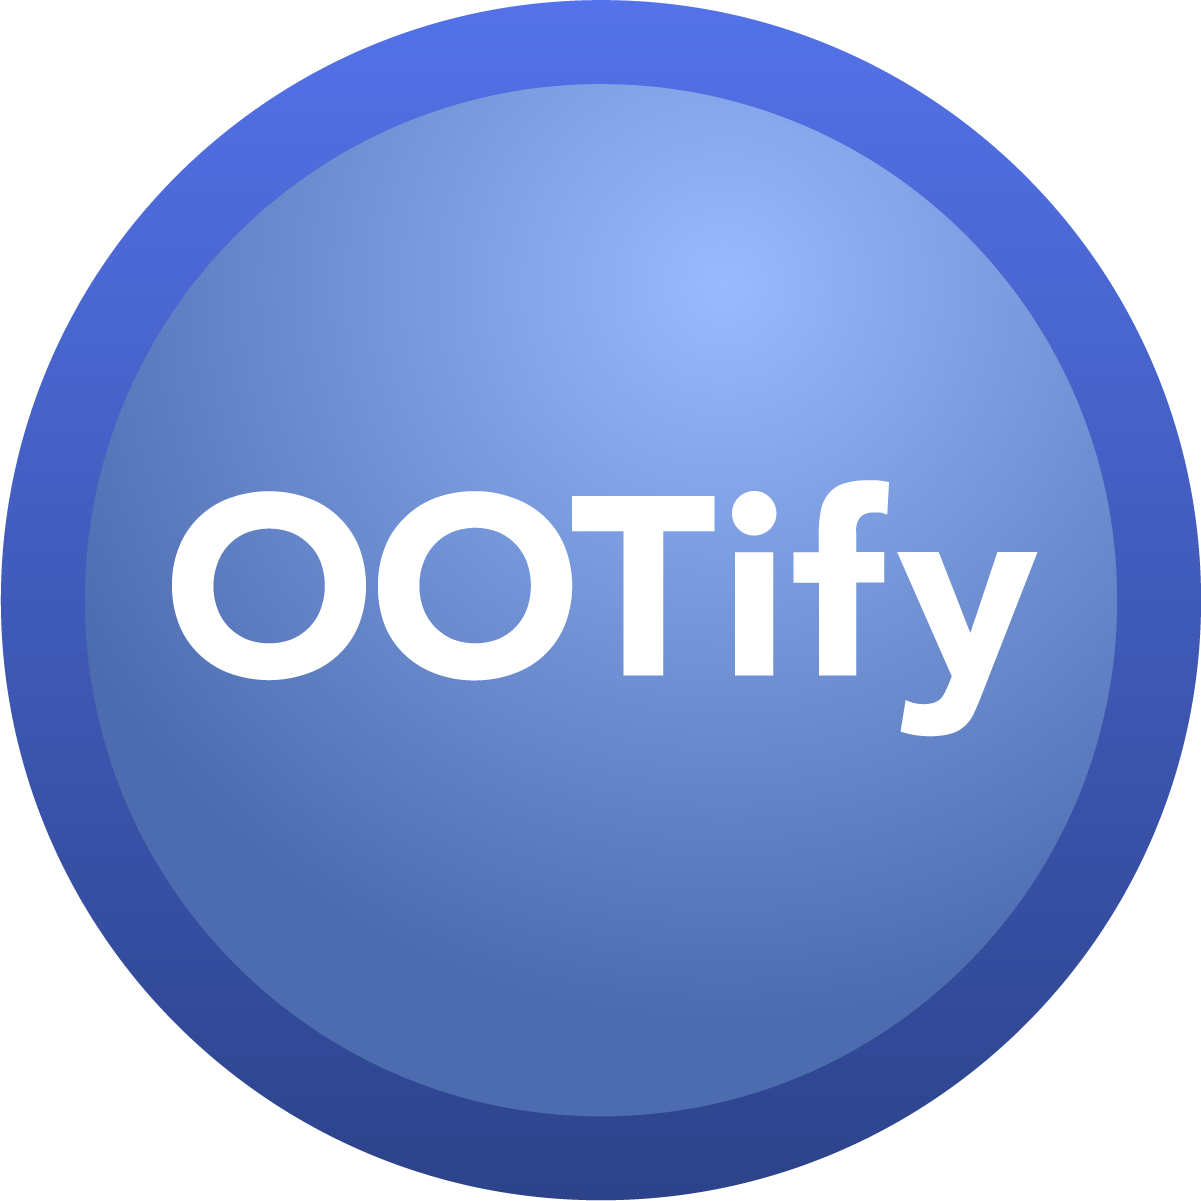 Ootify Logo